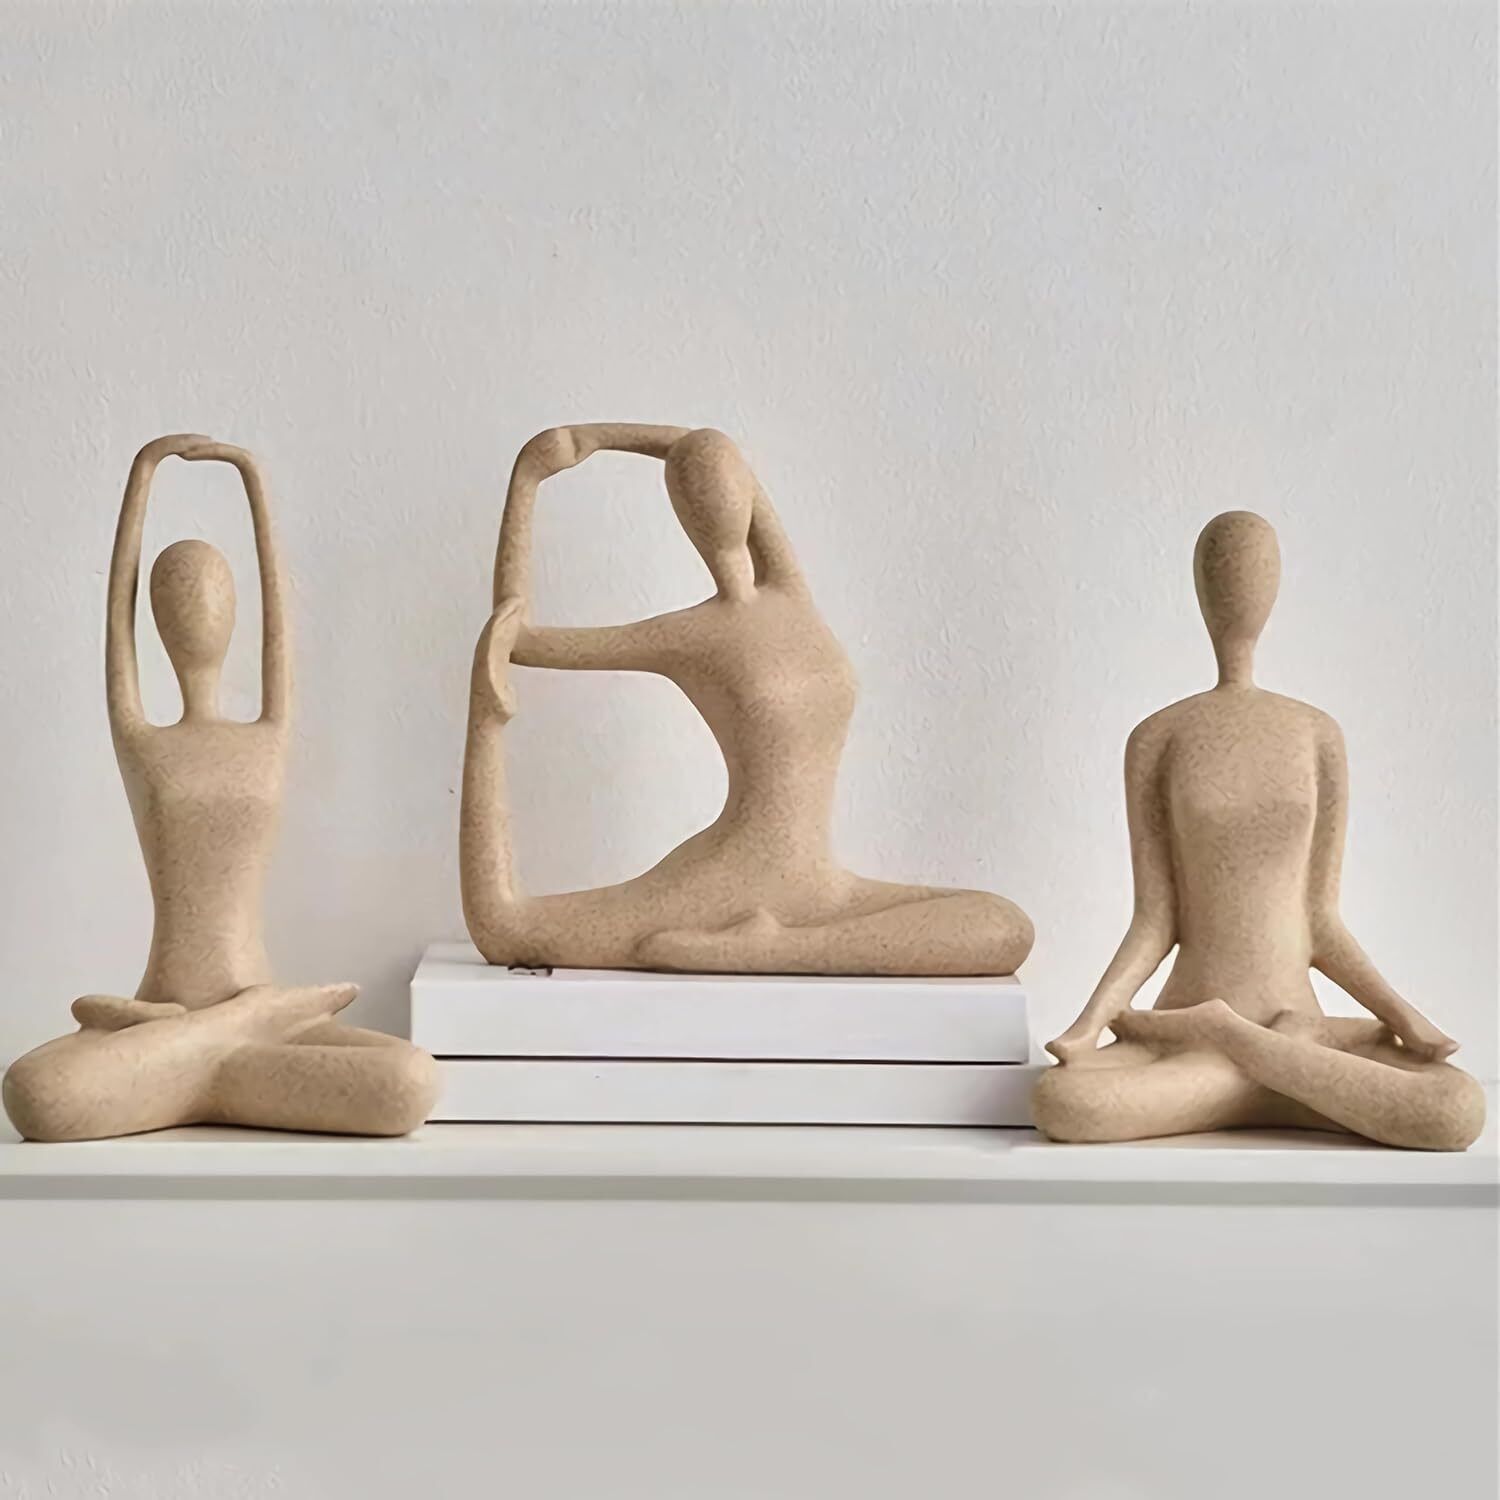 Sandstone Meditation Yoga Statues Set of 3, Resin Zen 